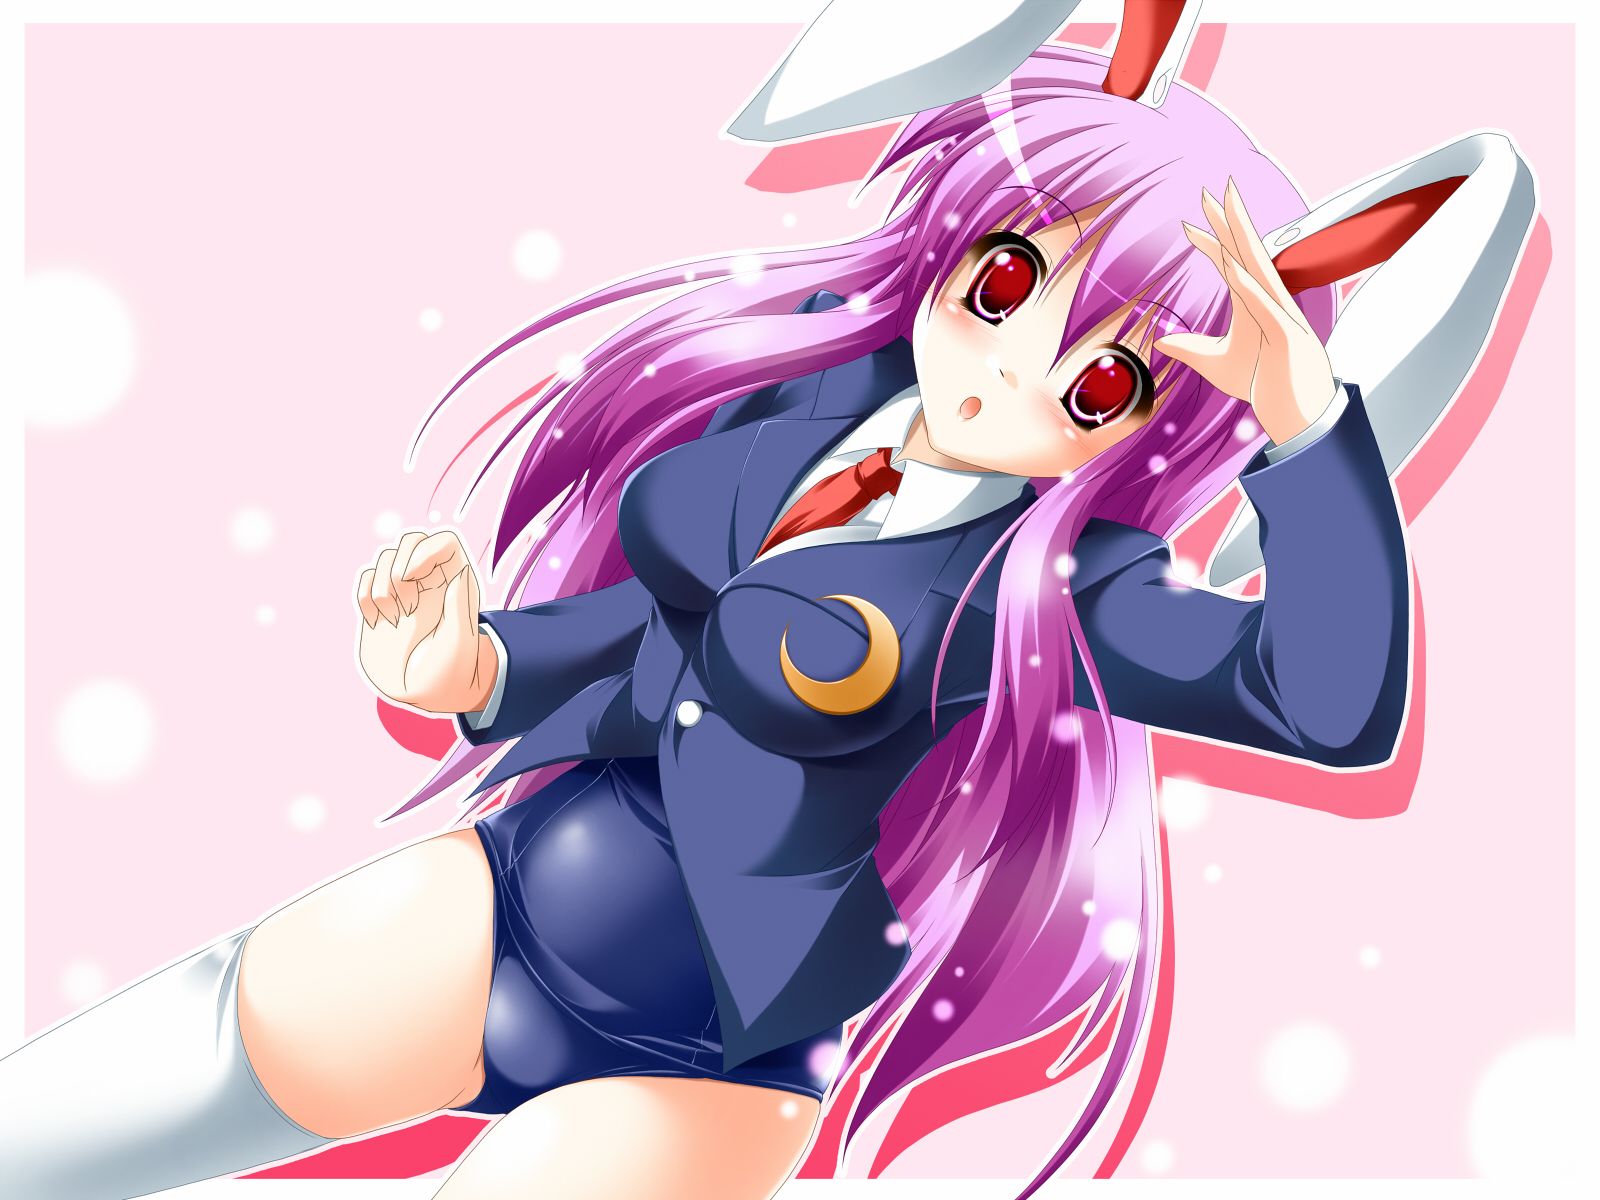 Anime Bunny Girl Wallpaper 1600x1200 .wallpapervortex.com